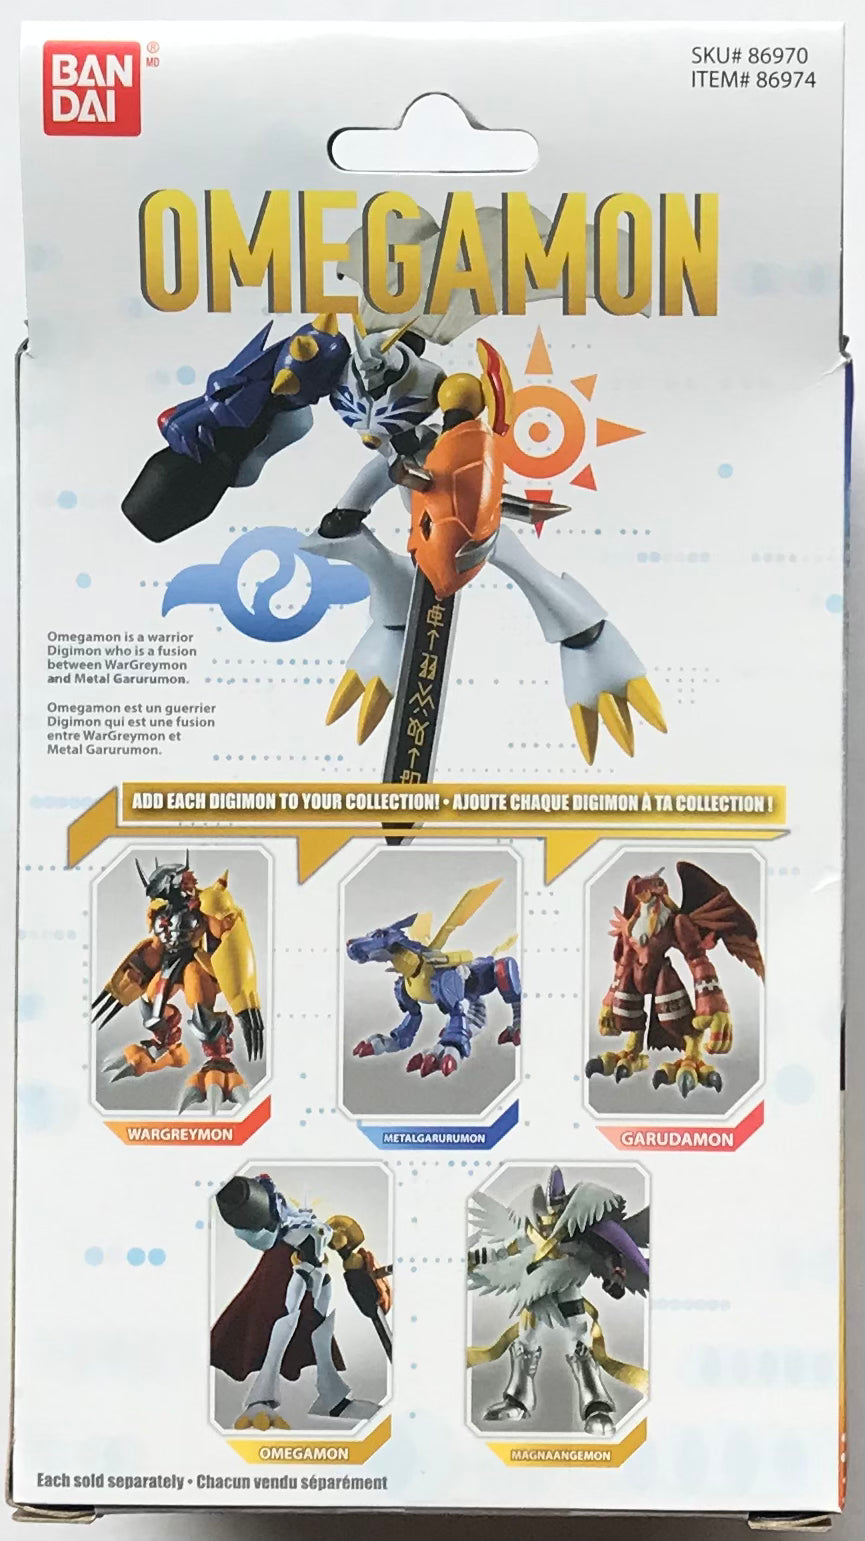 NEW Bandai Digimon Adventure SHODO Vol.2 Candy Toy 3 type set